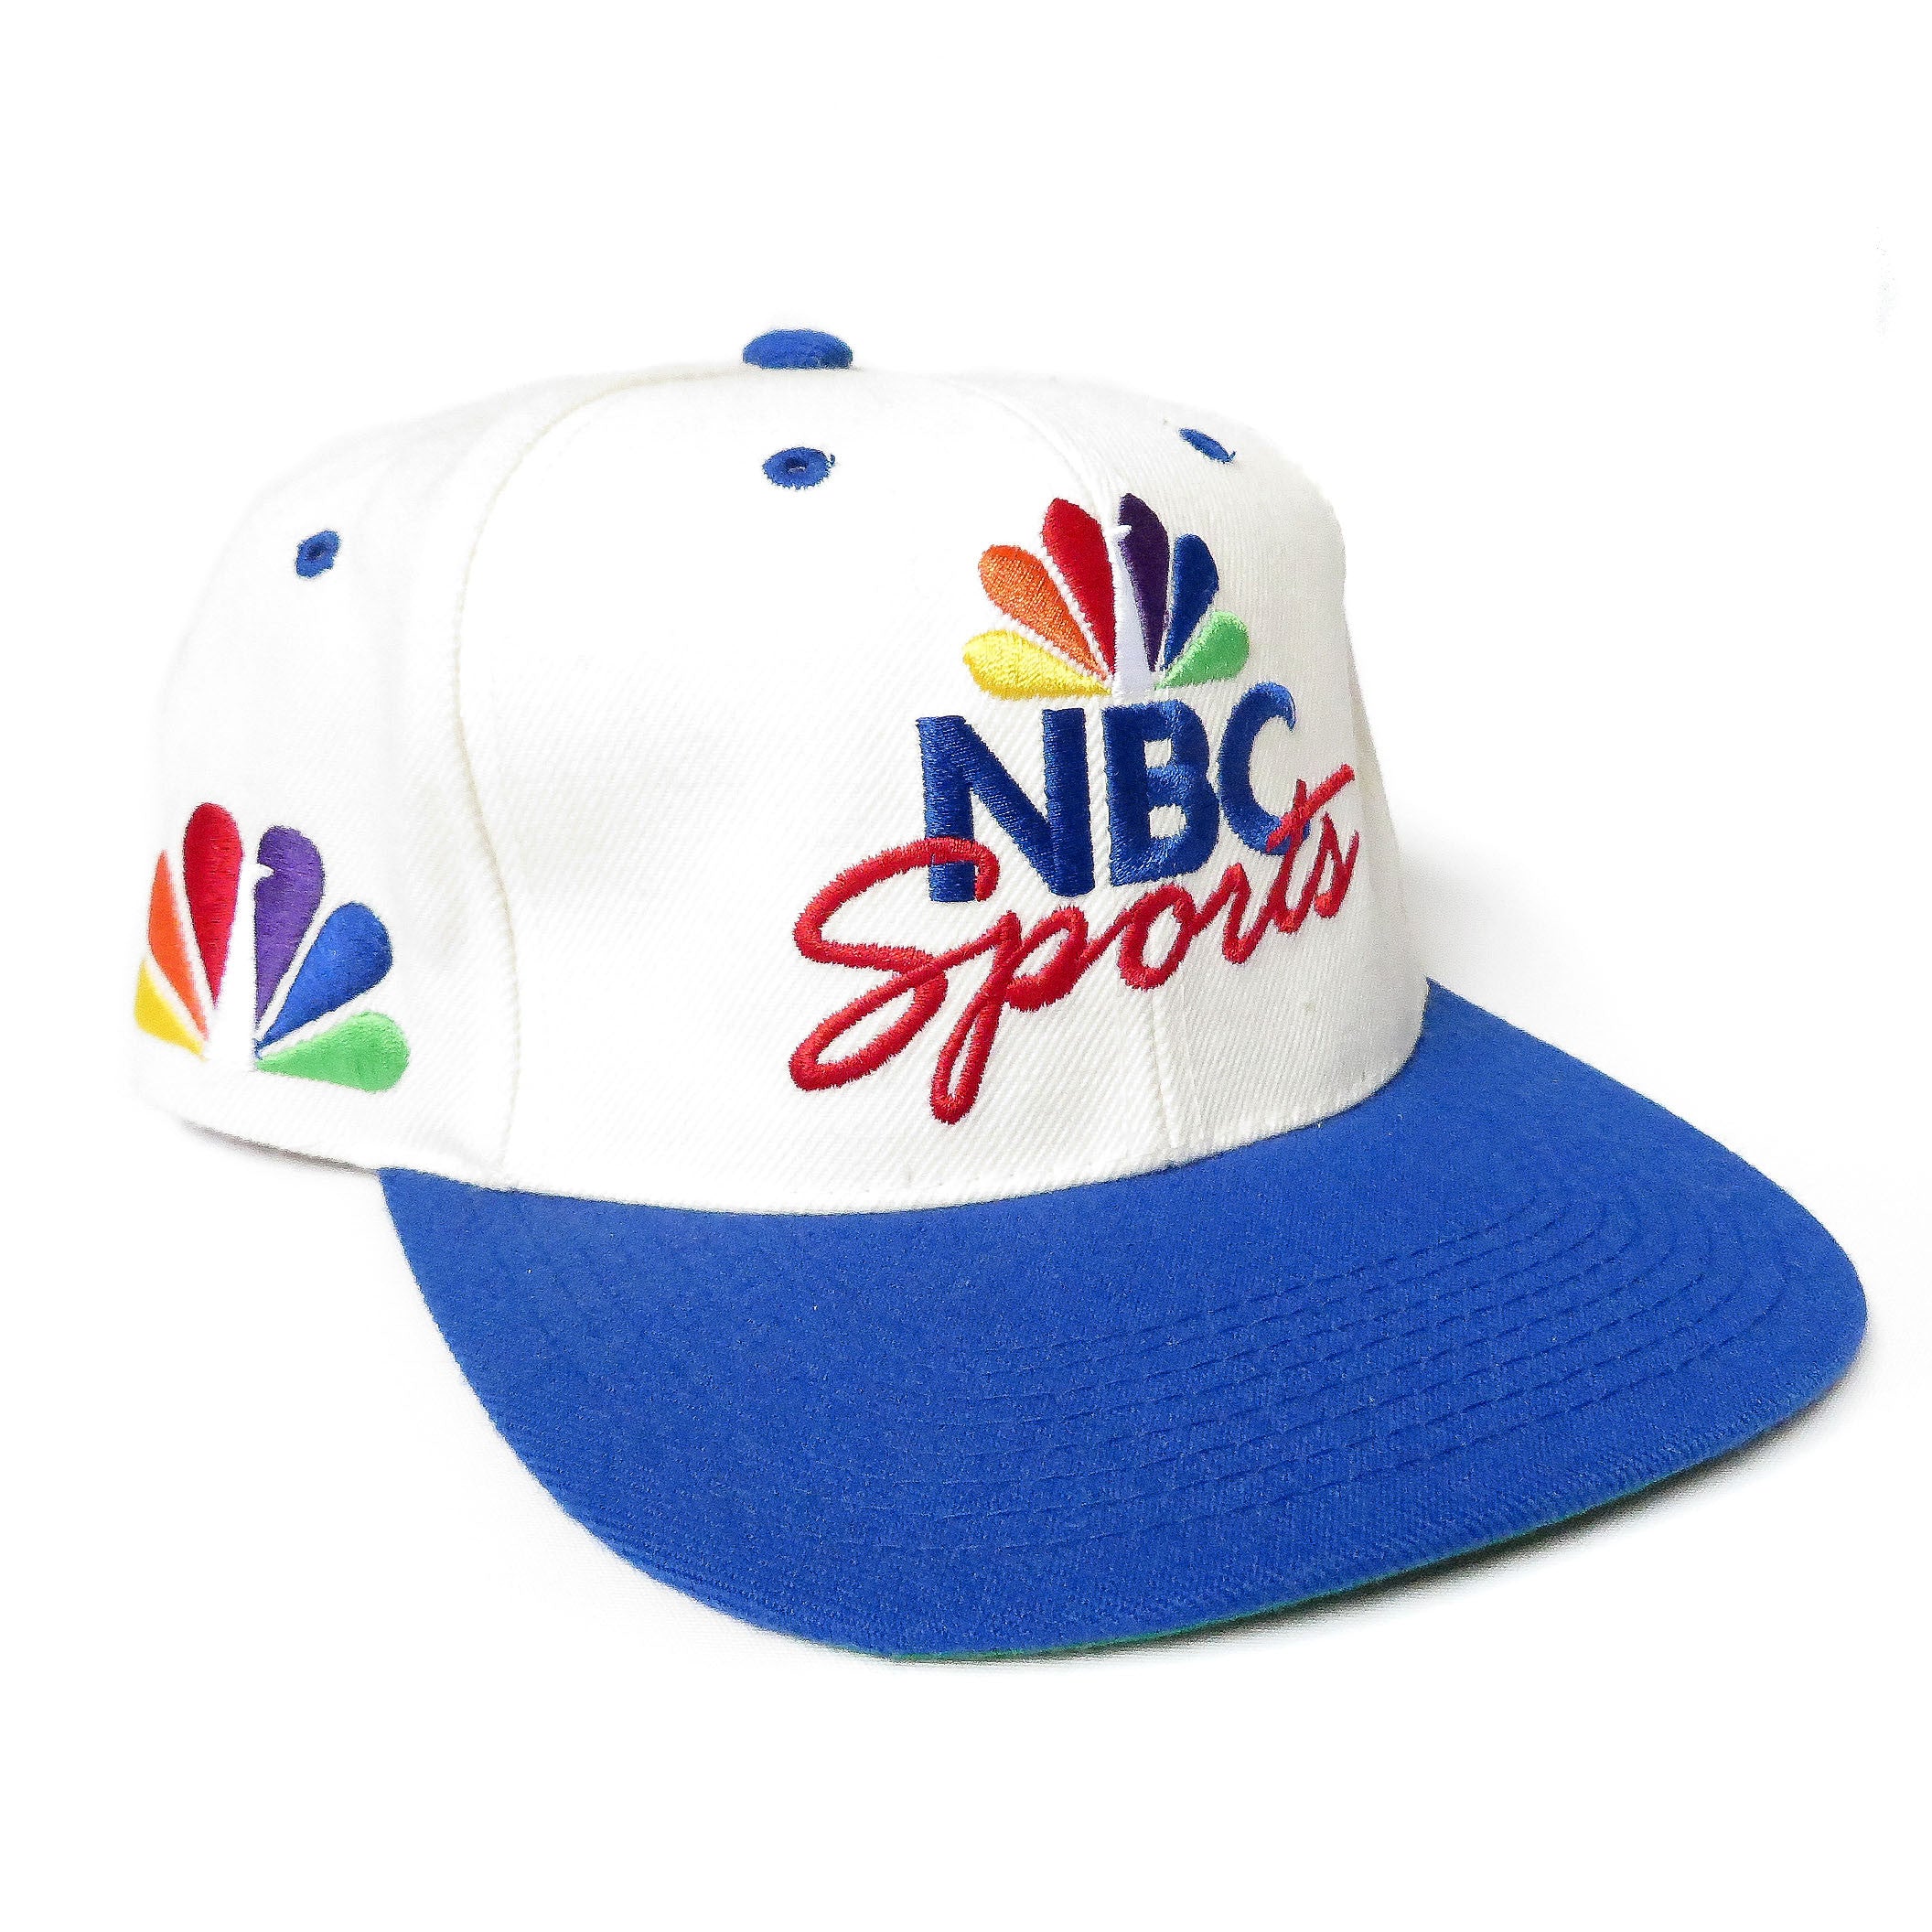 Vintage Sports Specialties NBC Sports Snapback Hat